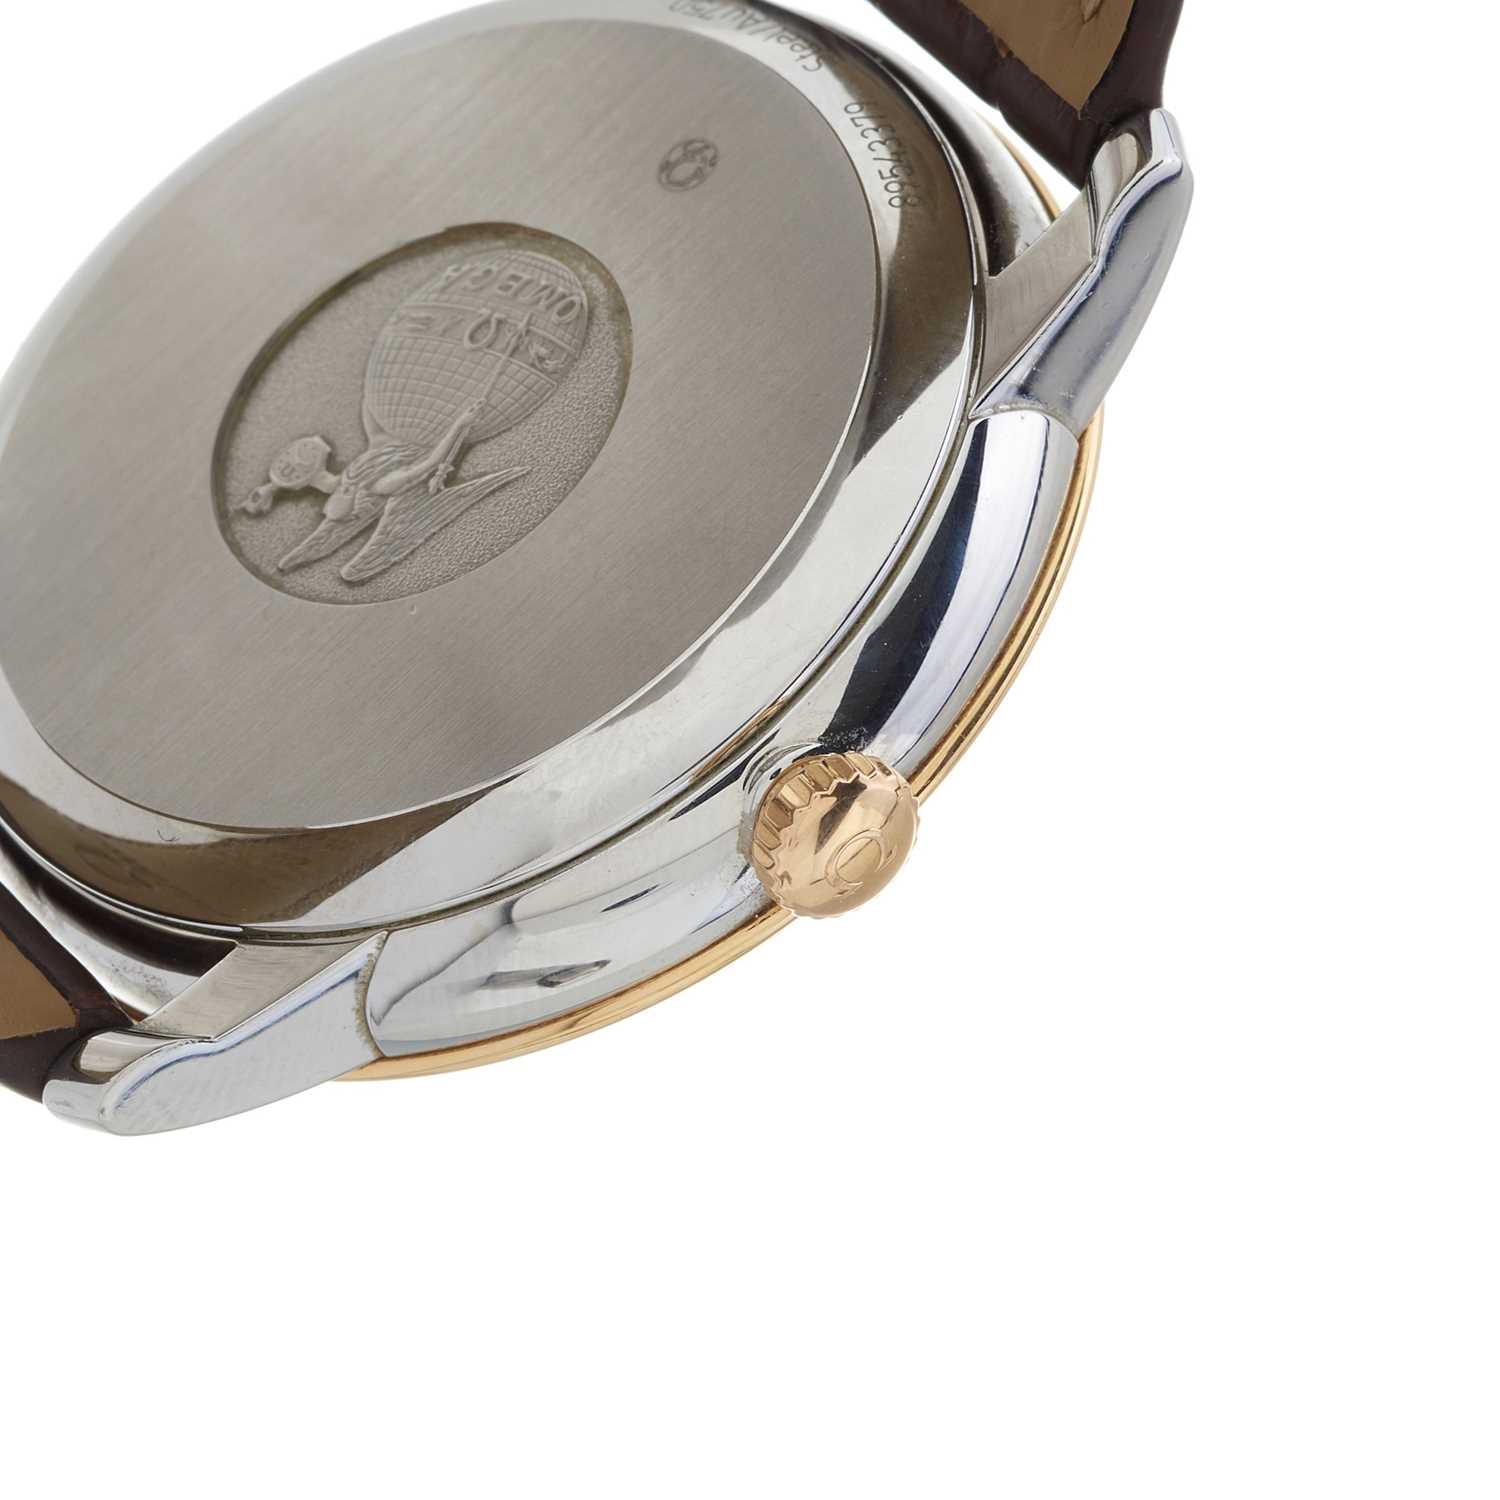 Omega, a De Ville Prestige Co-Axial Chronometer wrist watch - Image 3 of 6